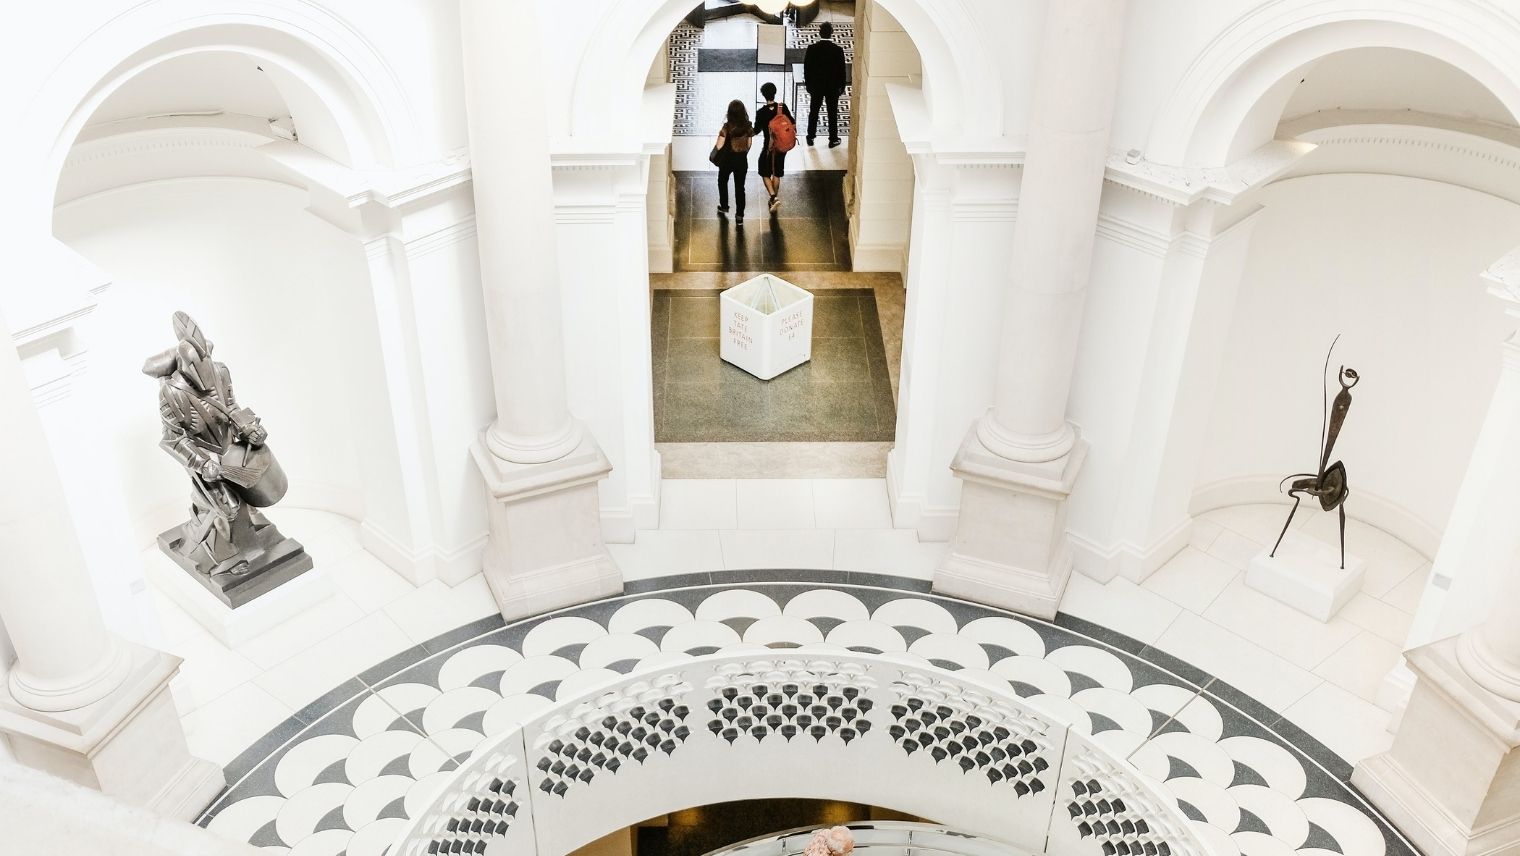 Interior of the Tate Britain